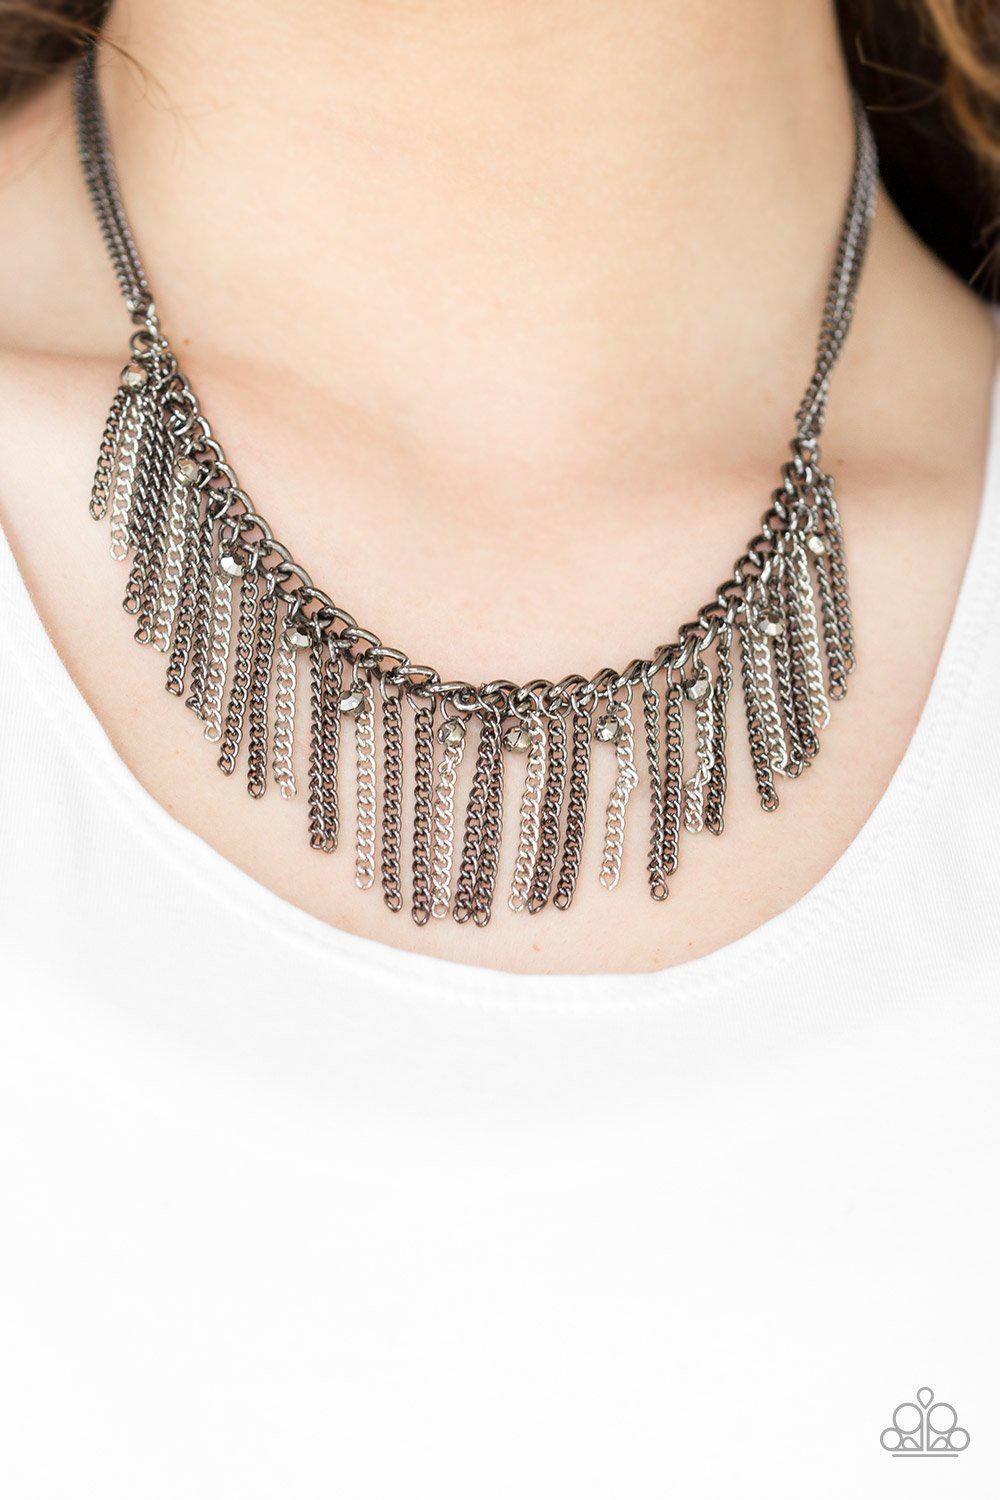 Retro Edge Gunmetal Black Fringe Necklace - Paparazzi Accessories-CarasShop.com - $5 Jewelry by Cara Jewels